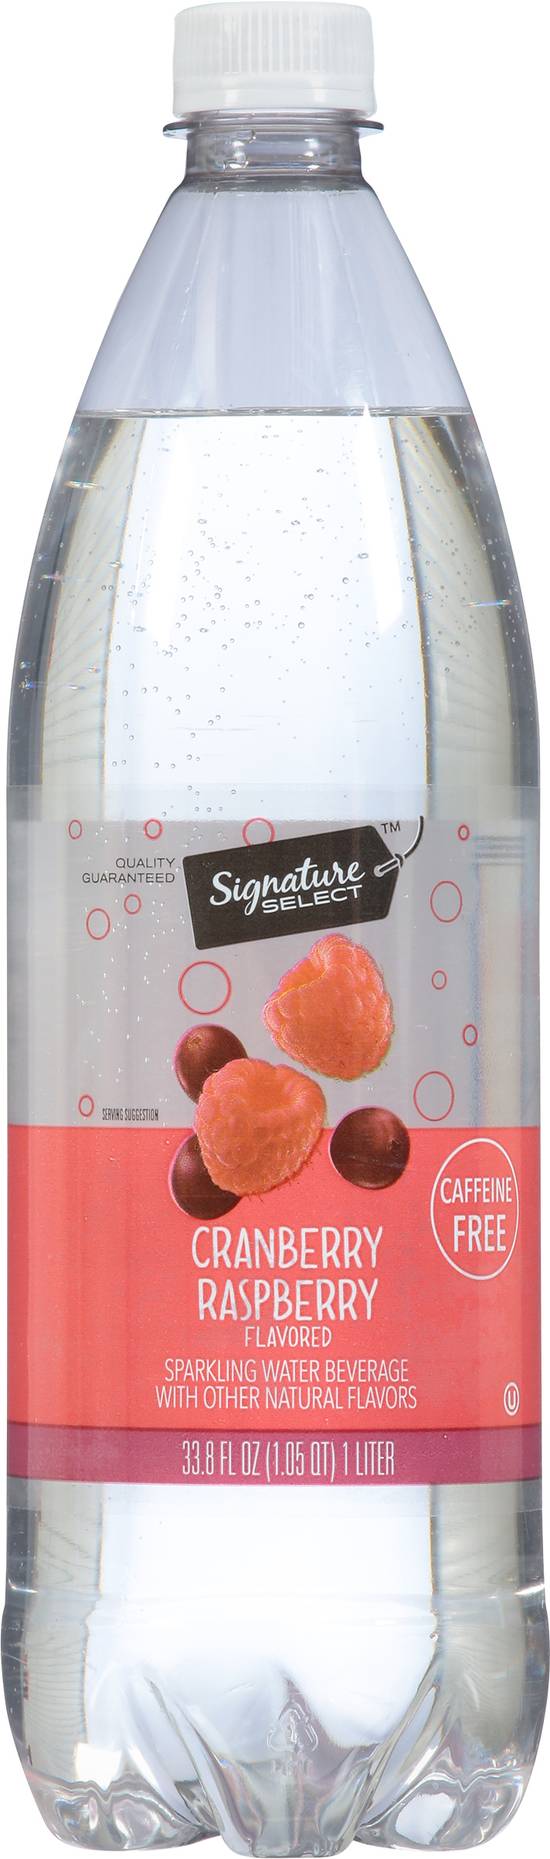 Signature Select Cranberry Raspberry Sparkling Water Beverage (33.8 fl oz)